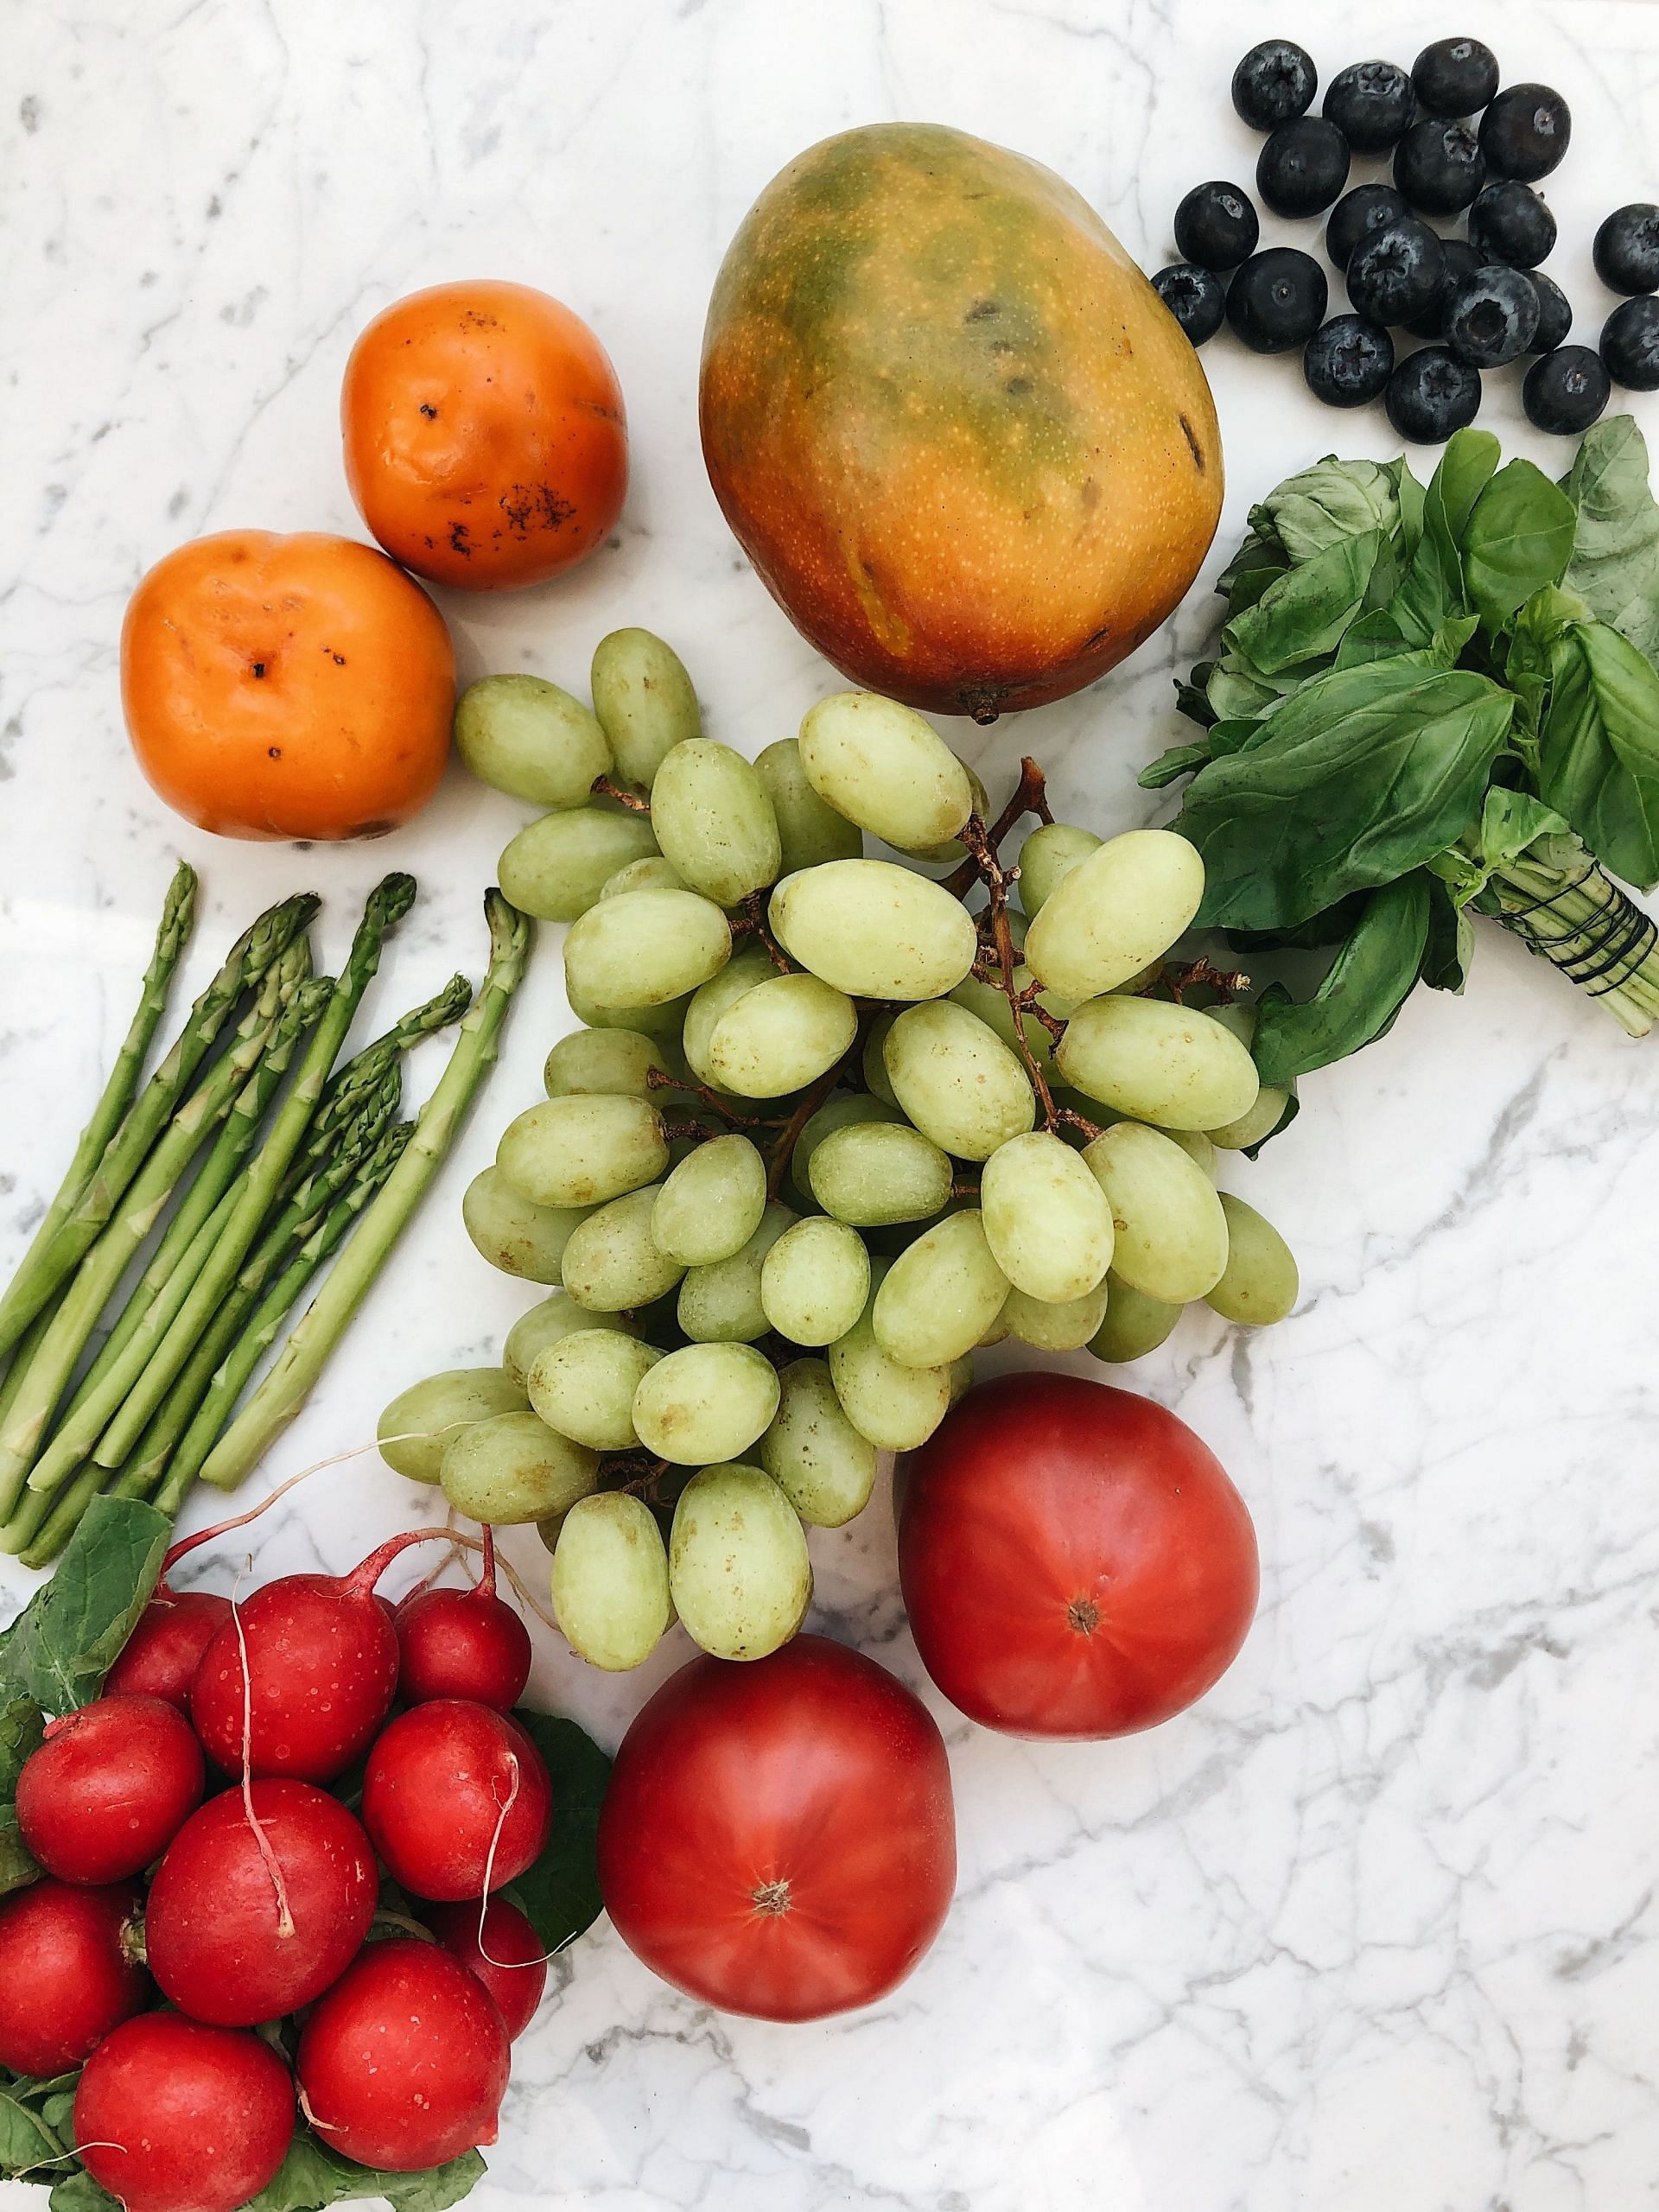 Fruits and veggies: Nature&#039;s medicine for a healthier you (Image via pexels)